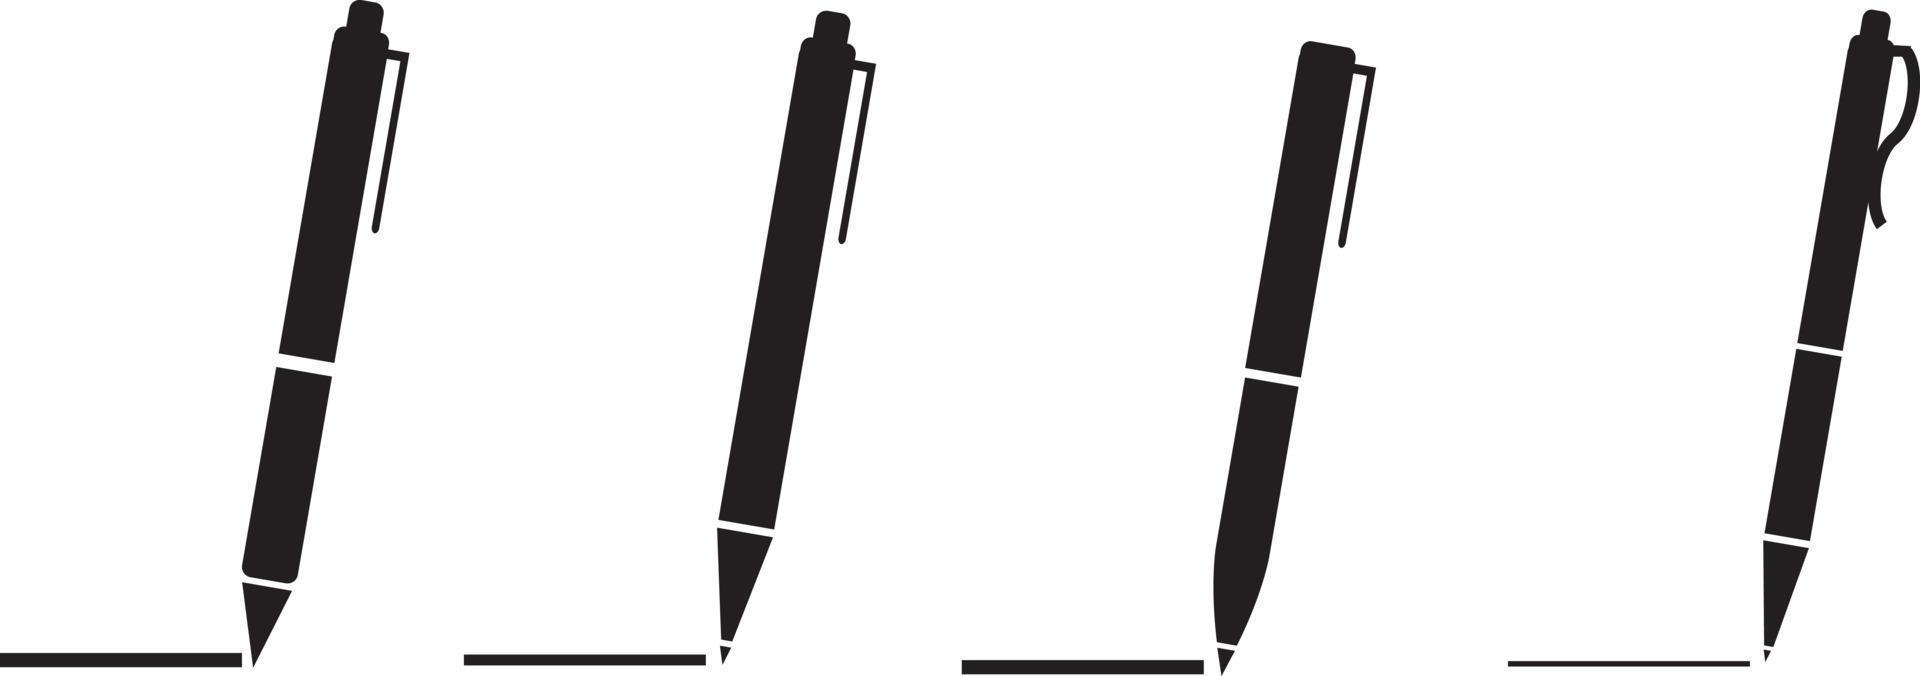 Pen simple icon set. Pen symbol collection. Vector